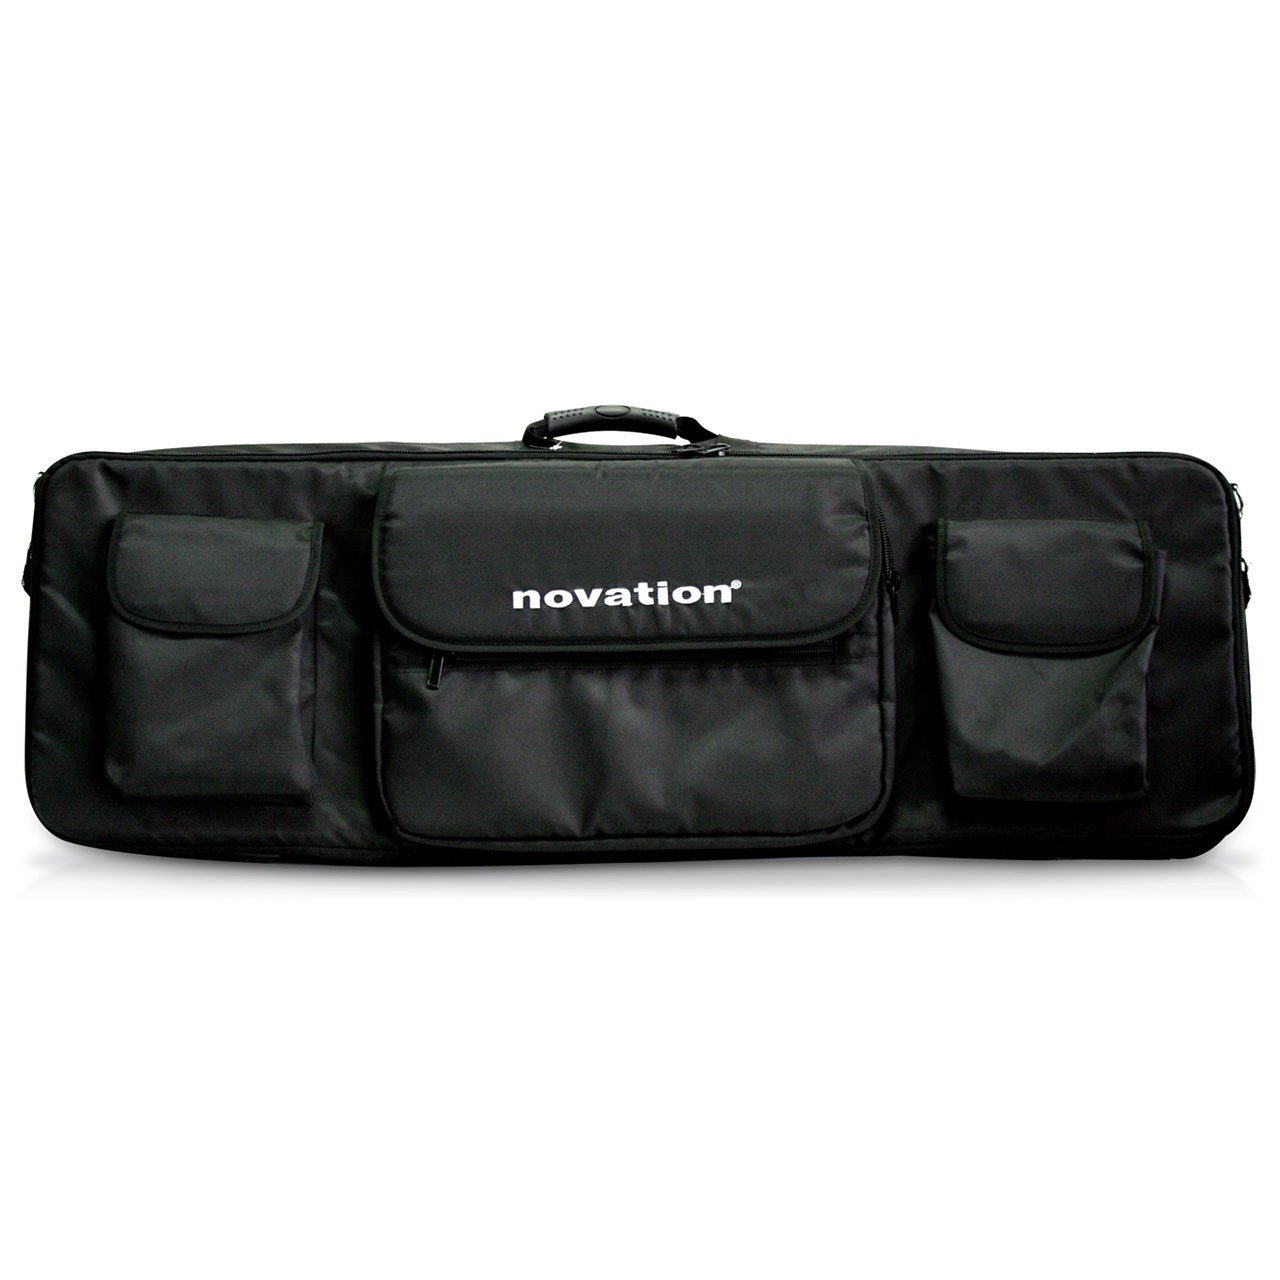 Keyboard Accessories - Novation 61 Key Keyboard Gig Bag